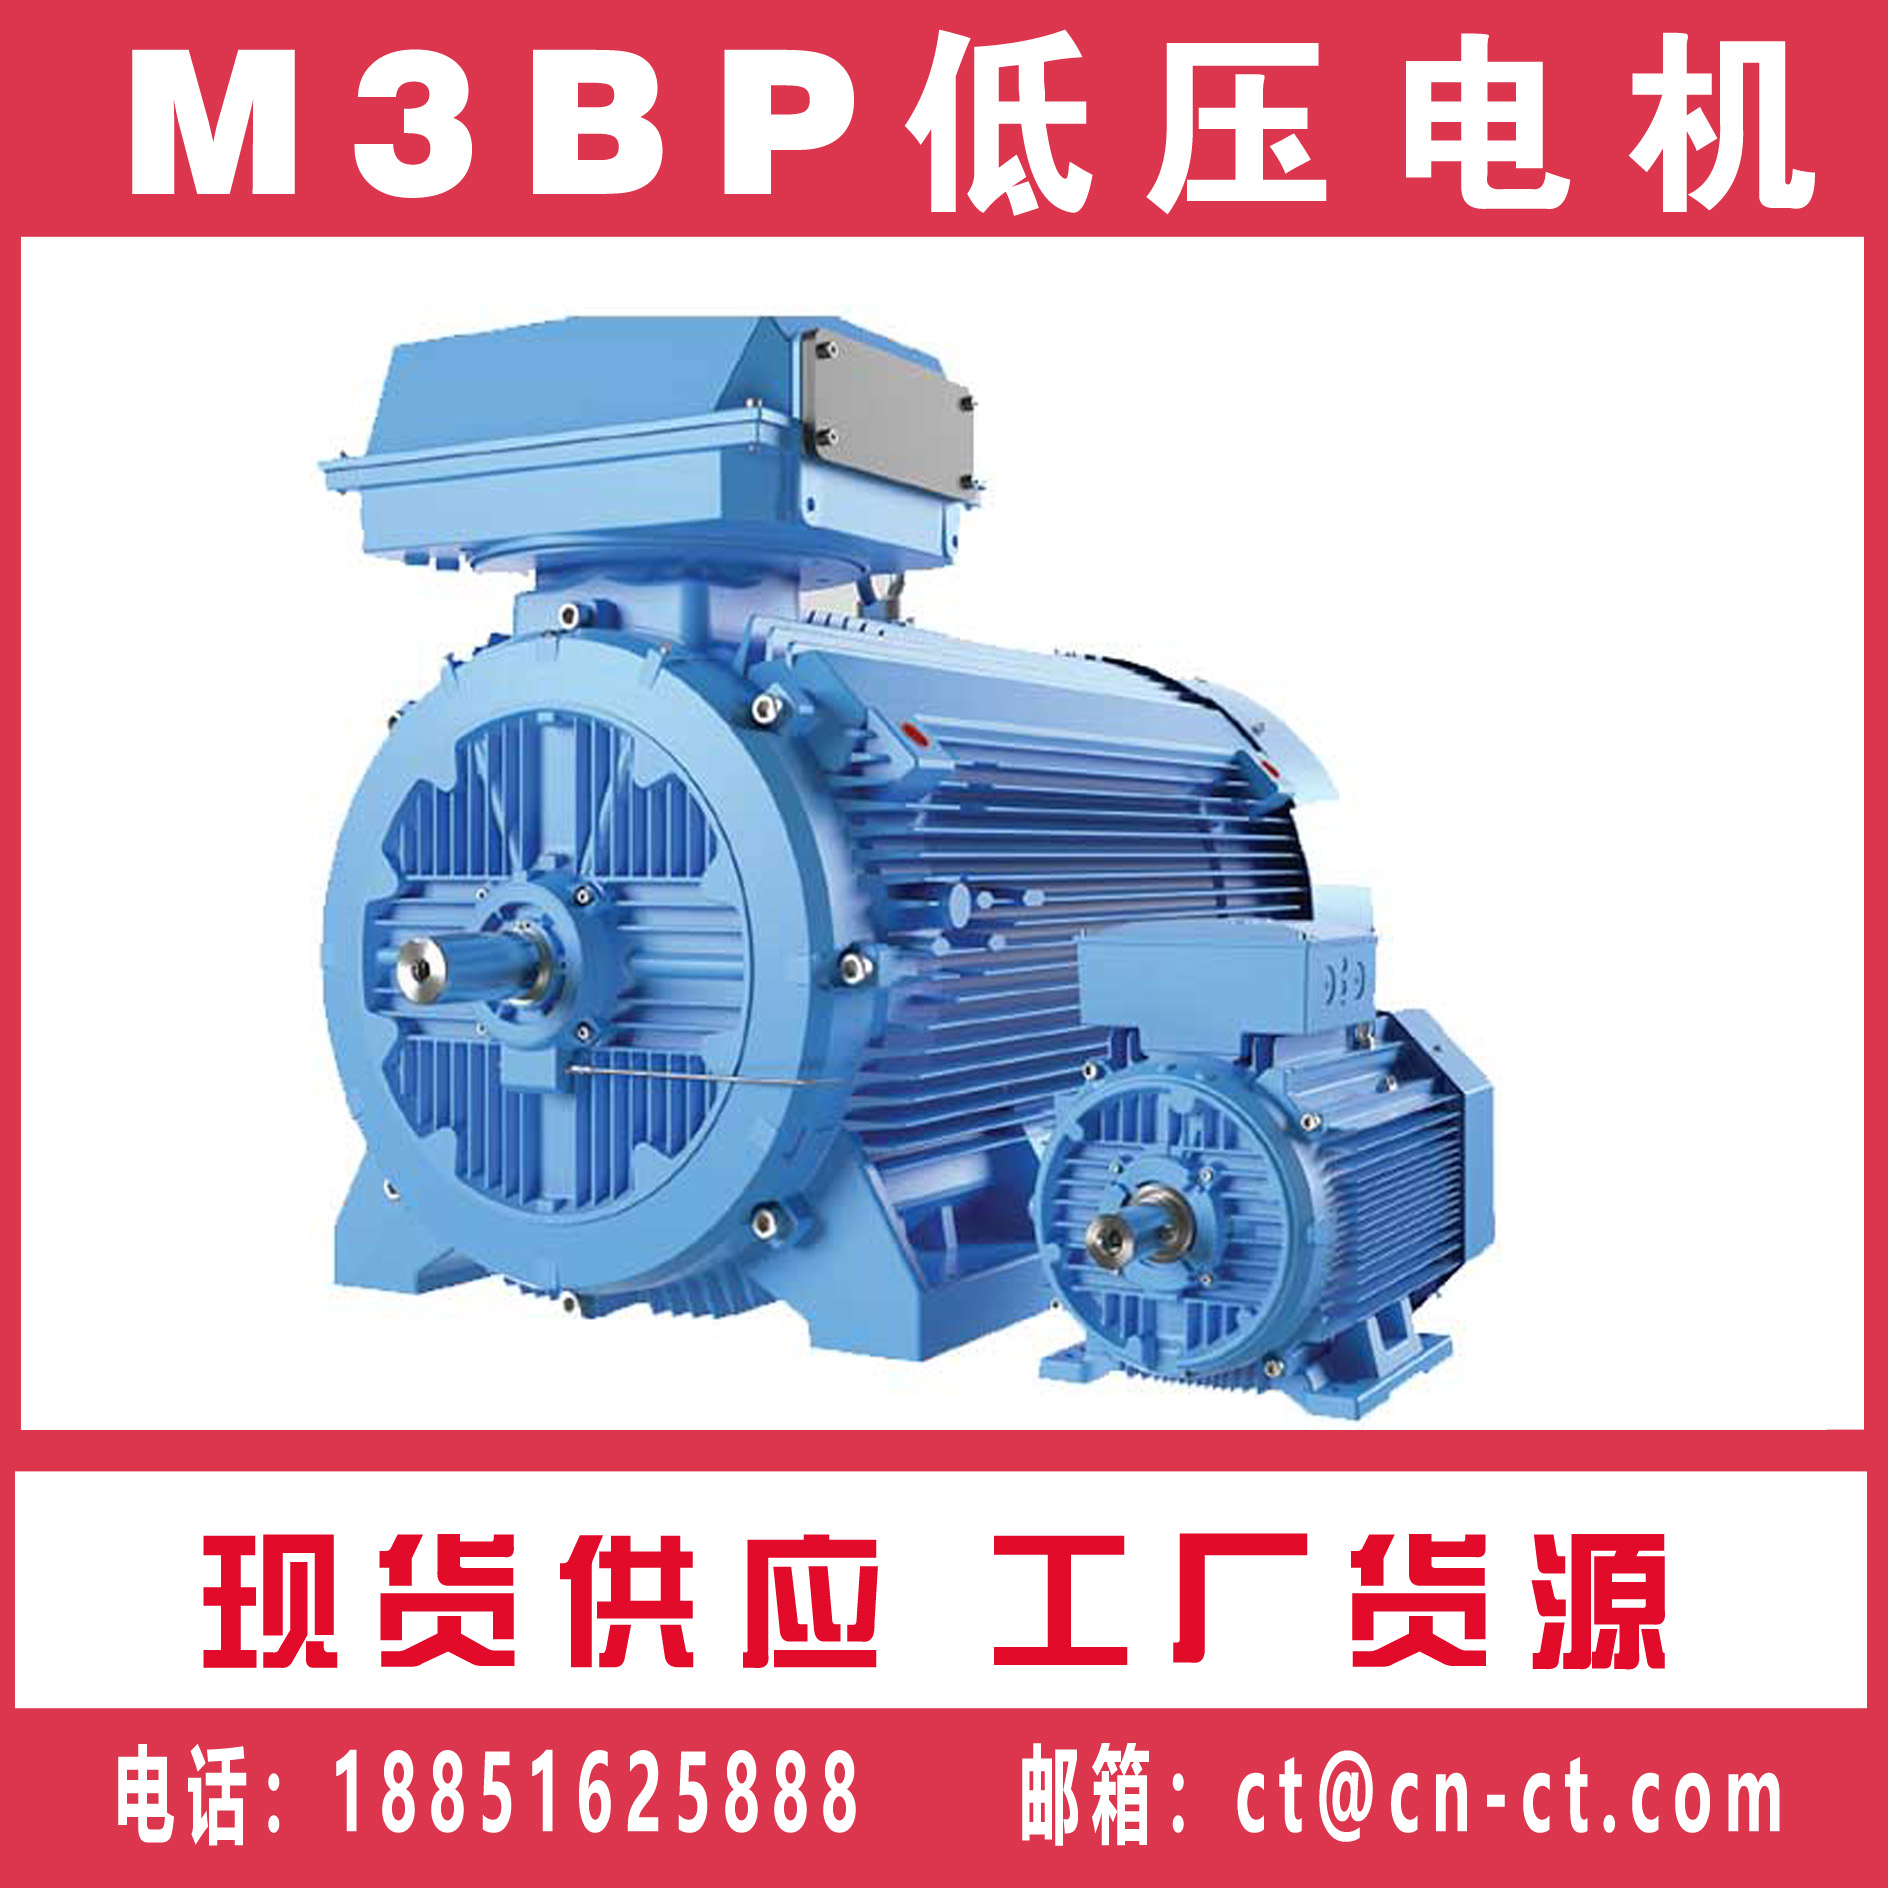 ABB高效电机 M3BP系列高性能电机